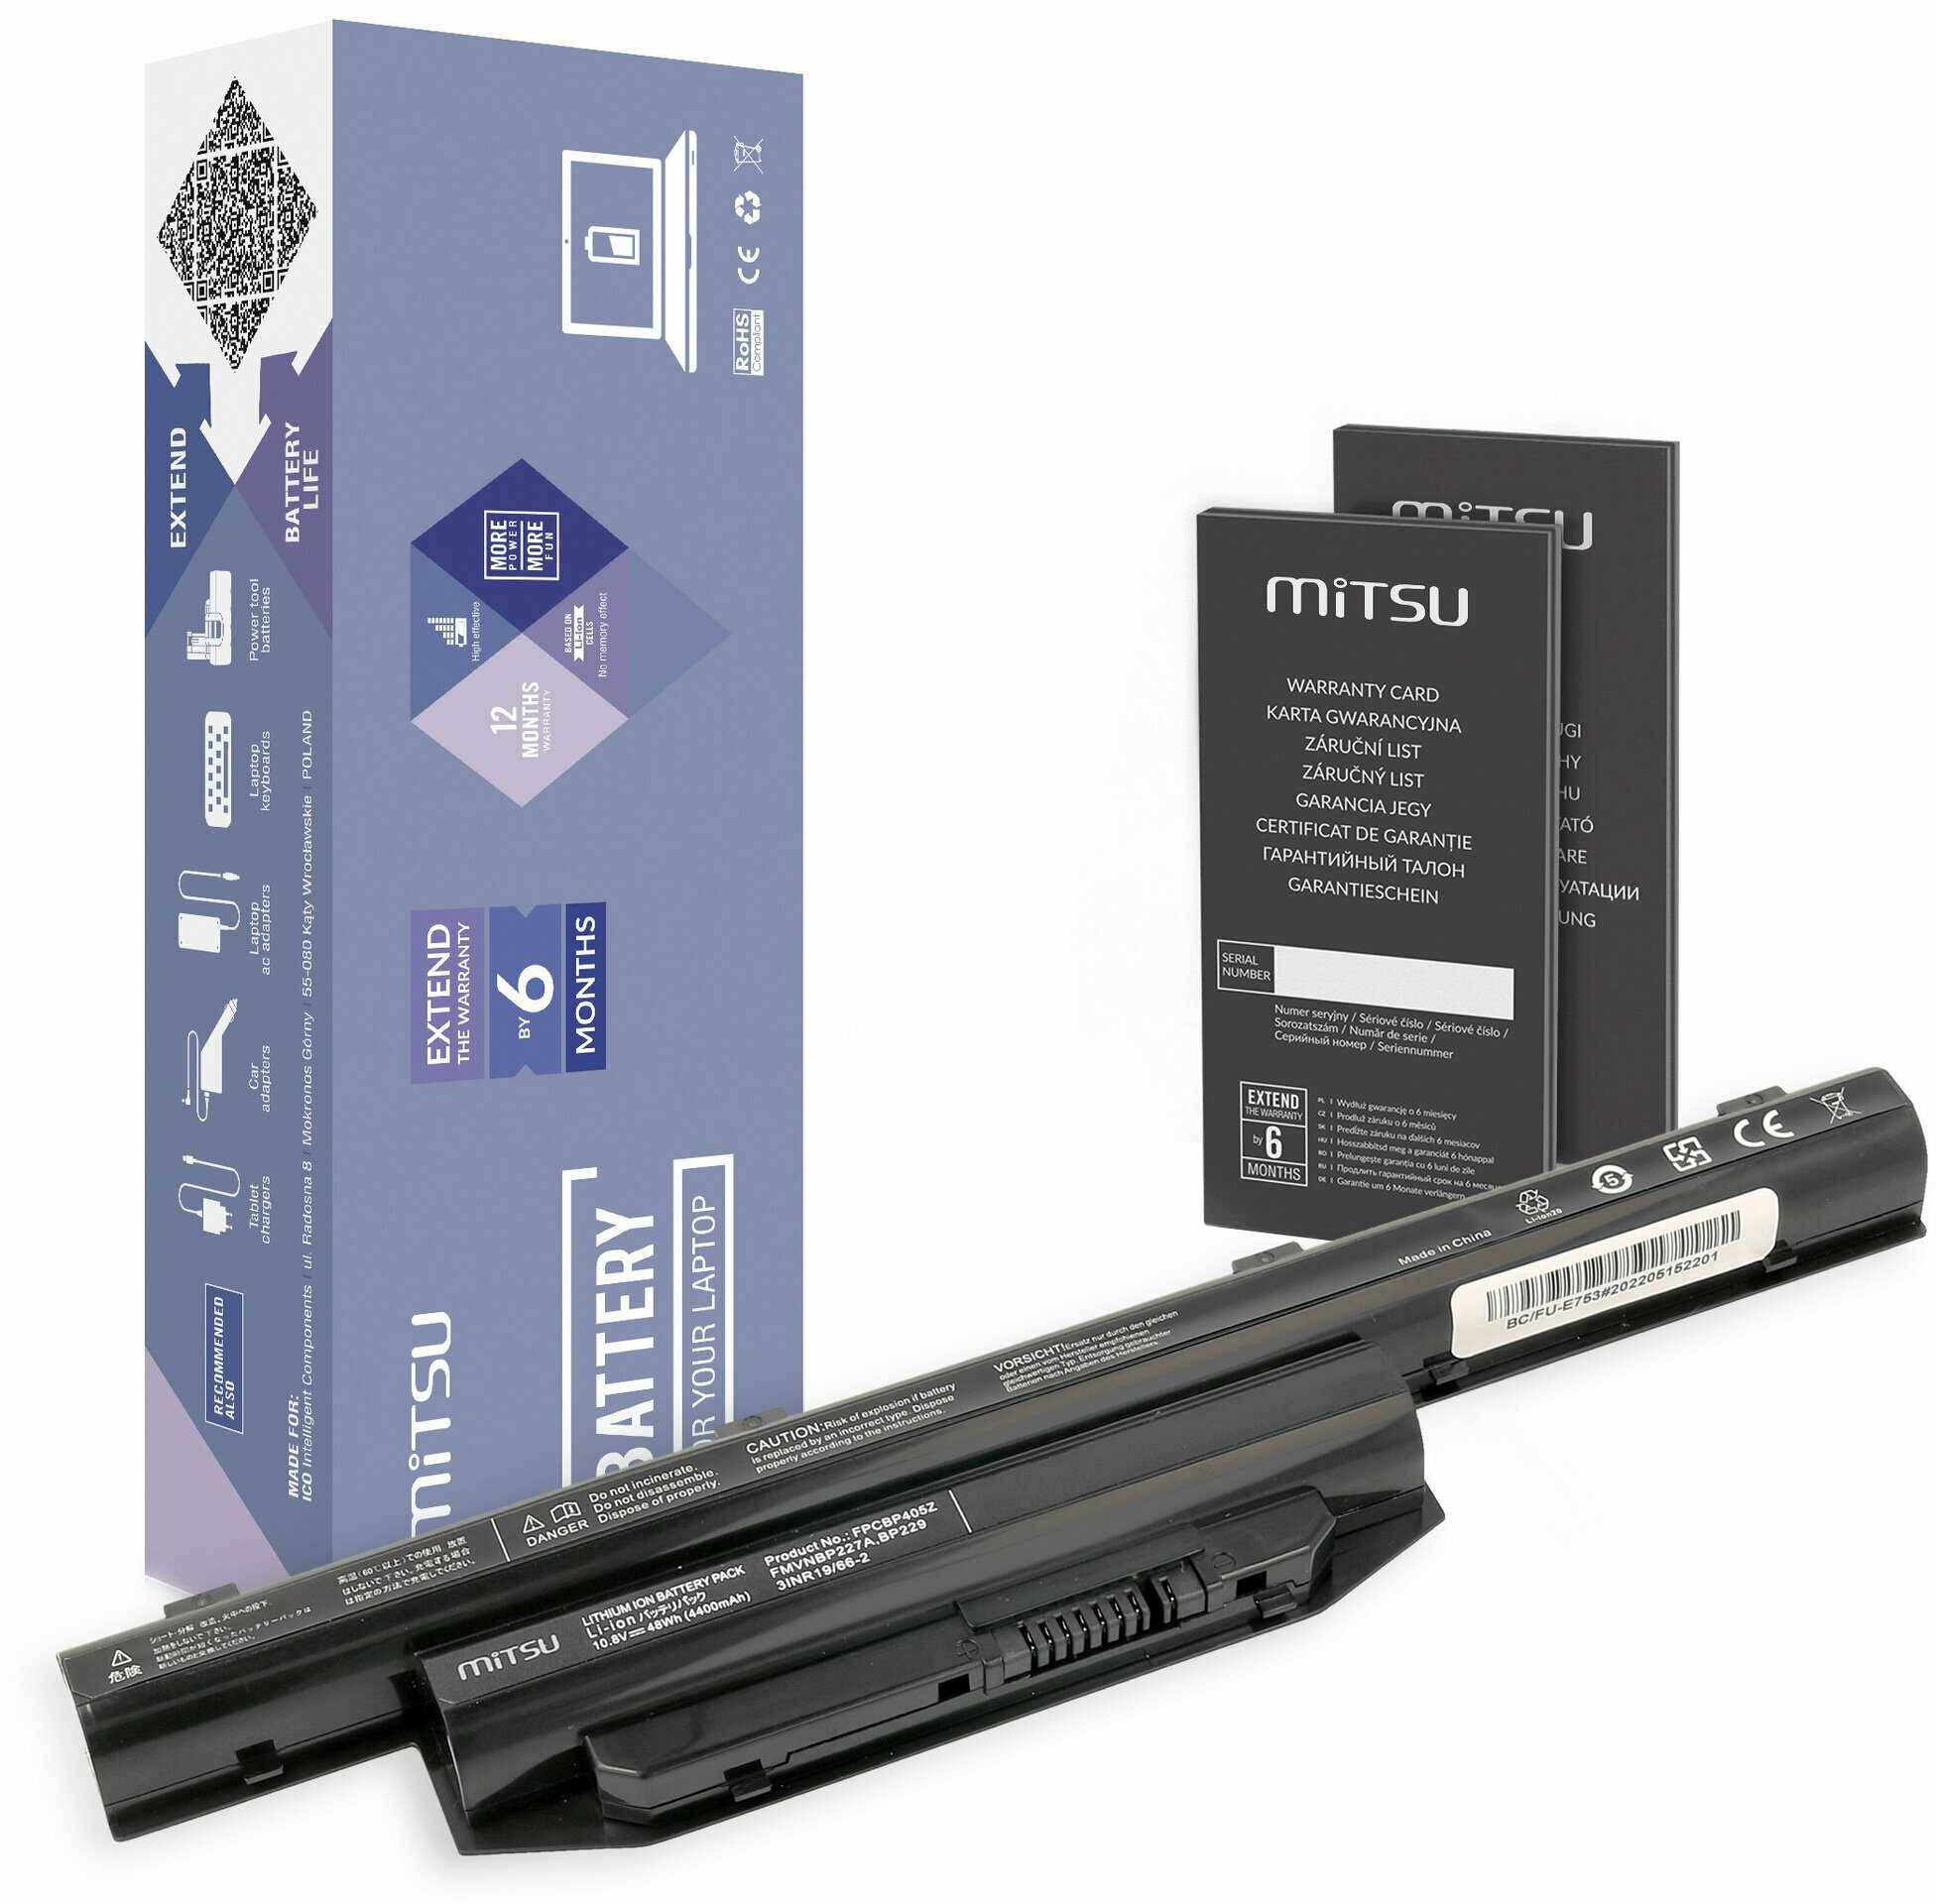 Bateria Mitsu do Fujitsu Lifebook E753 CP651527